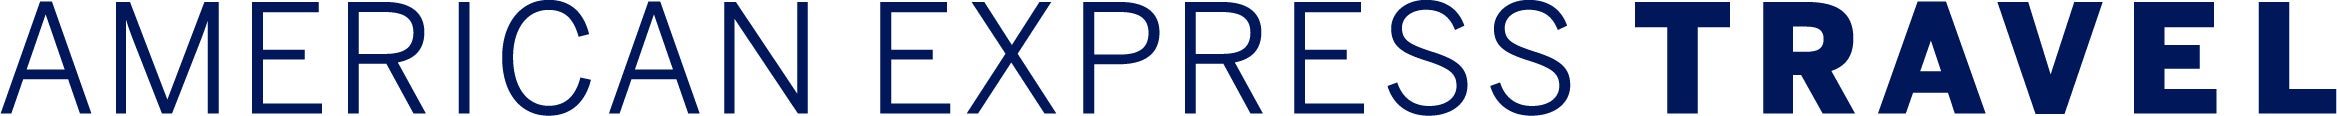 Amex Travel 2 logo